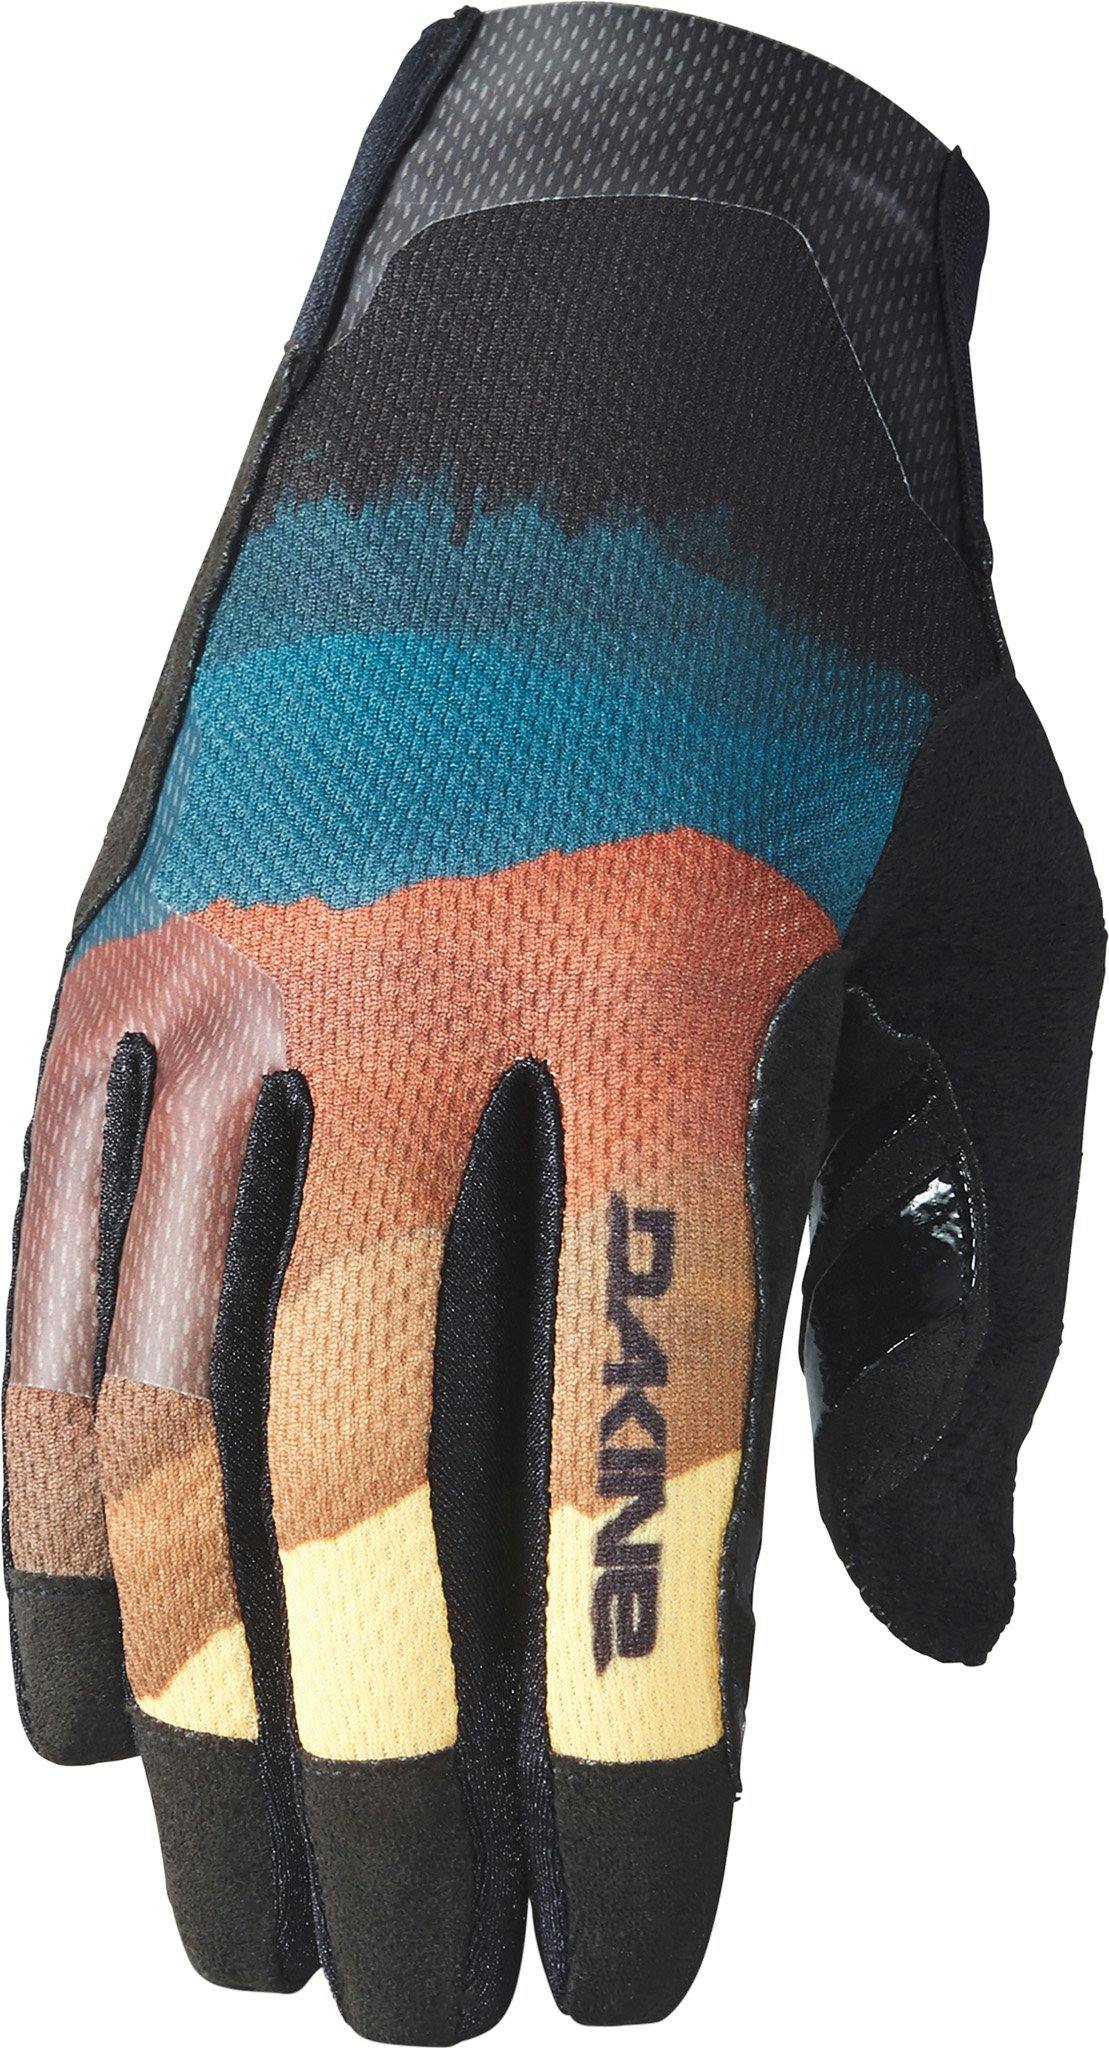 Product image for Covert Gloves - Women's